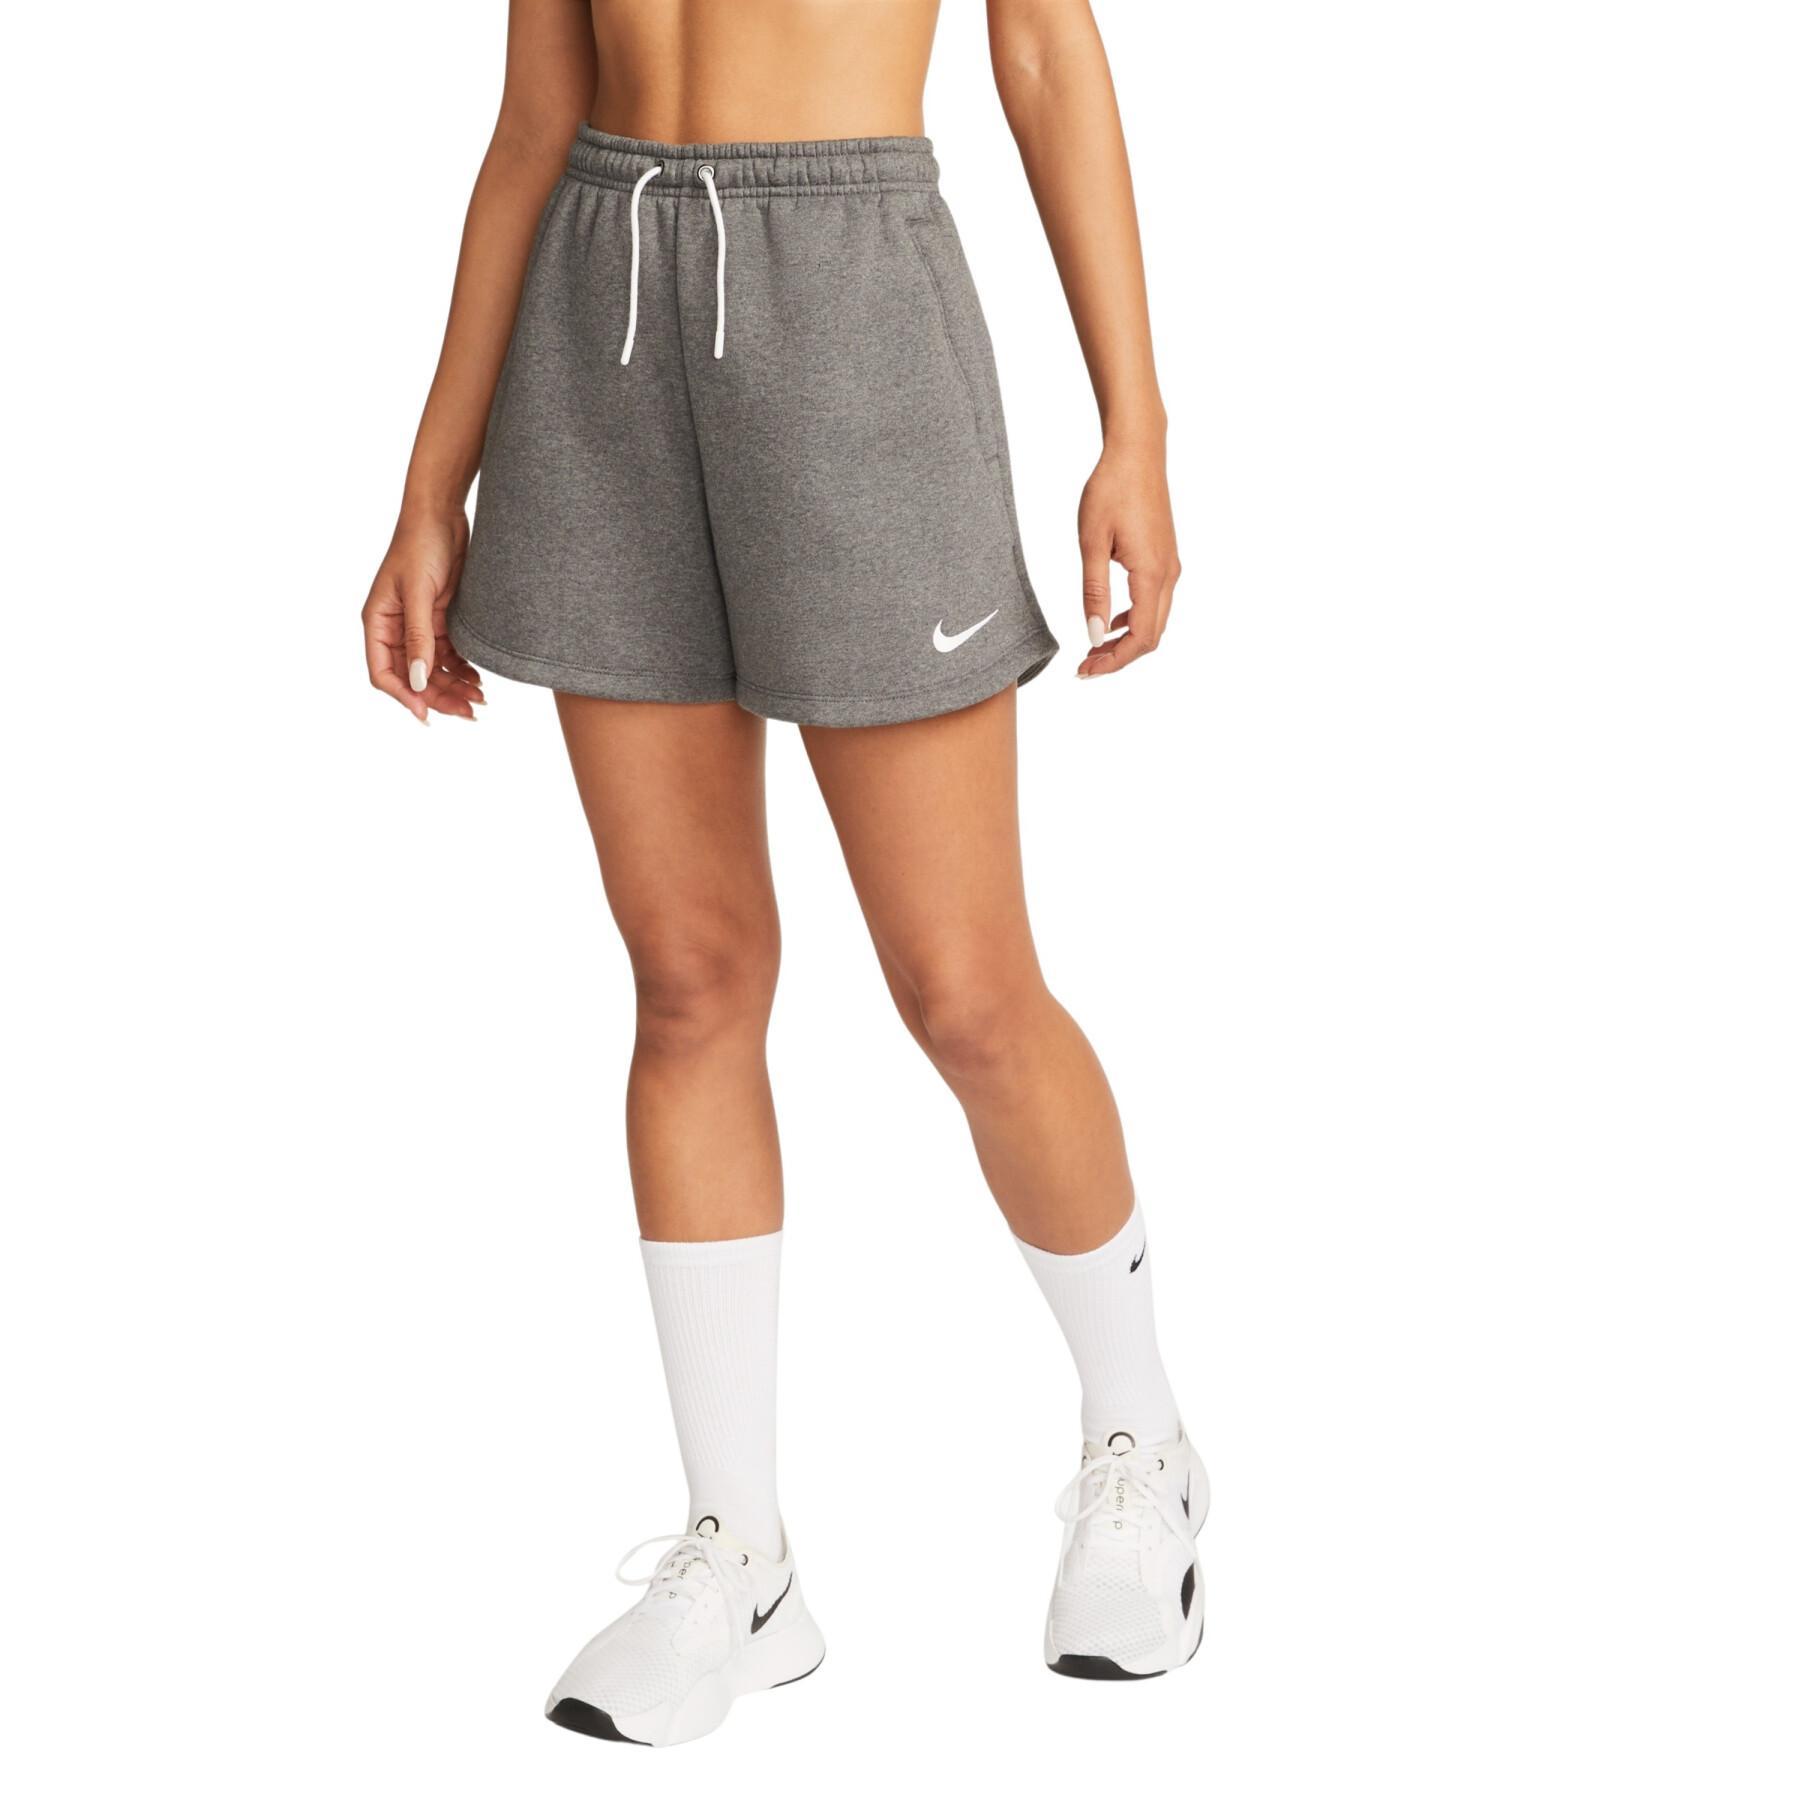 Women's shorts Nike Fleece Park20